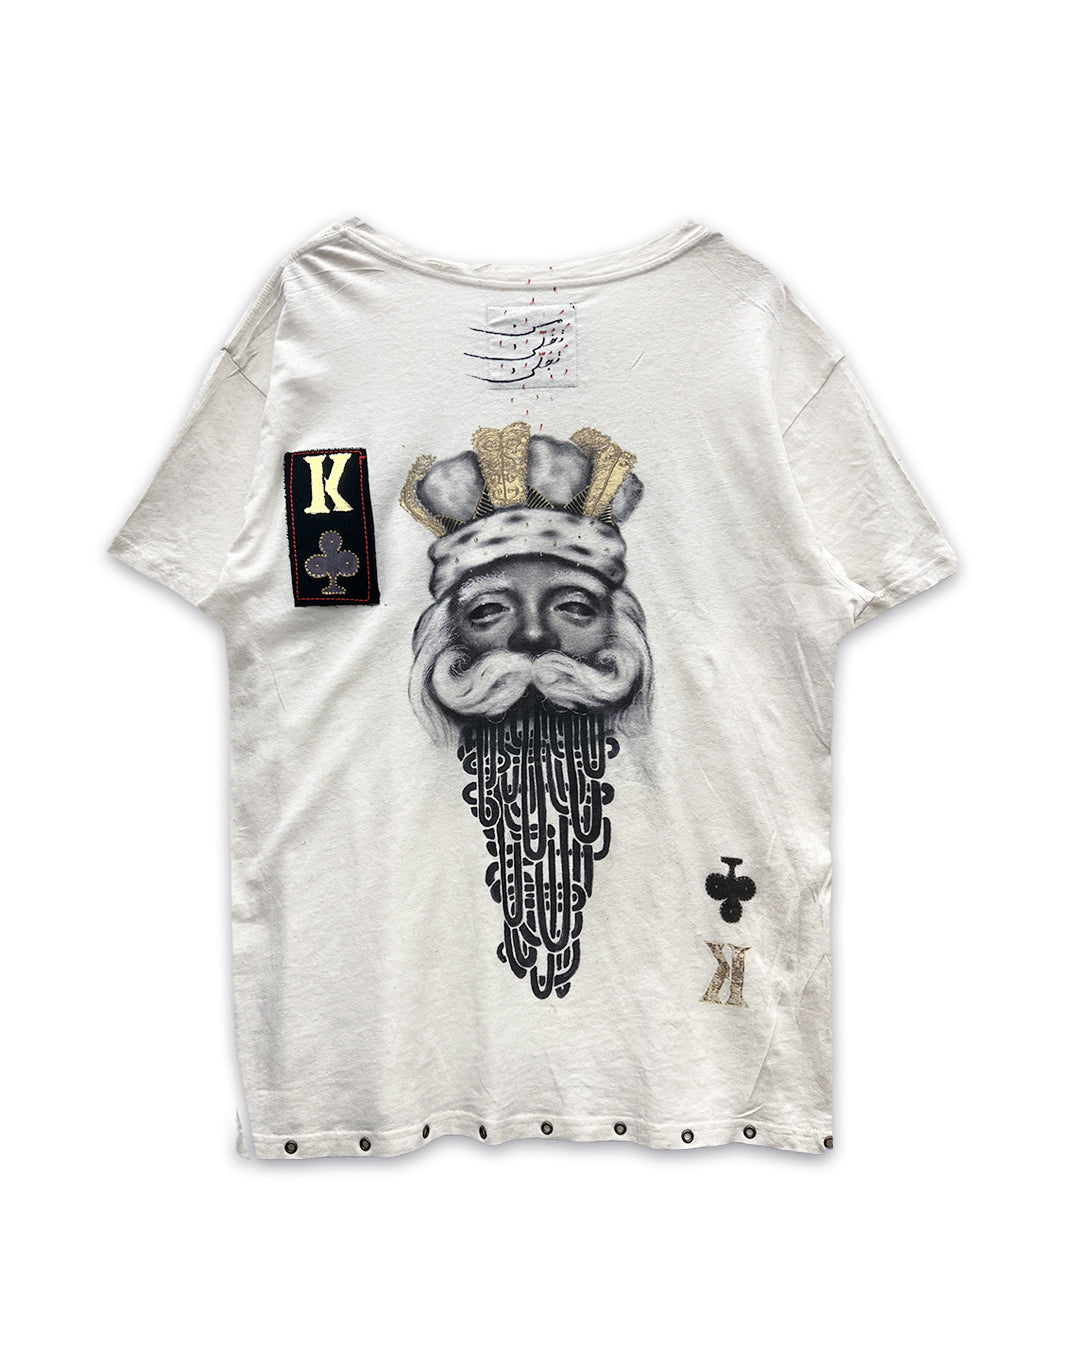 'King' T-shirt